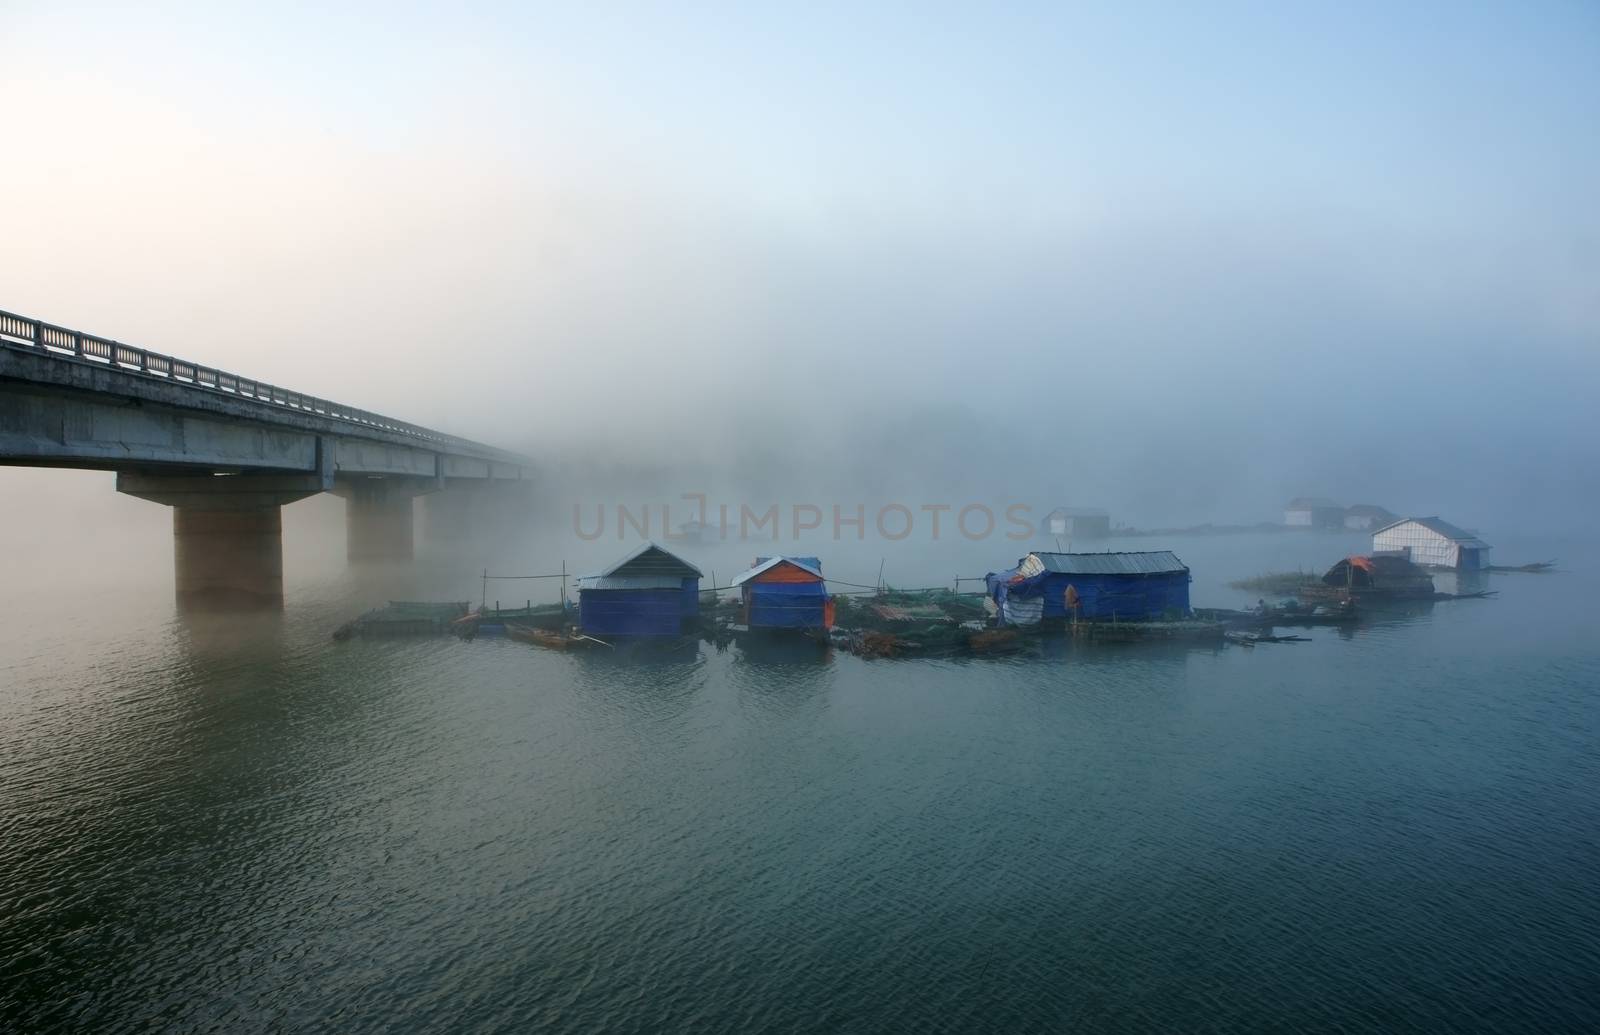  bridge, fishing hamlet on lake in fog  by xuanhuongho